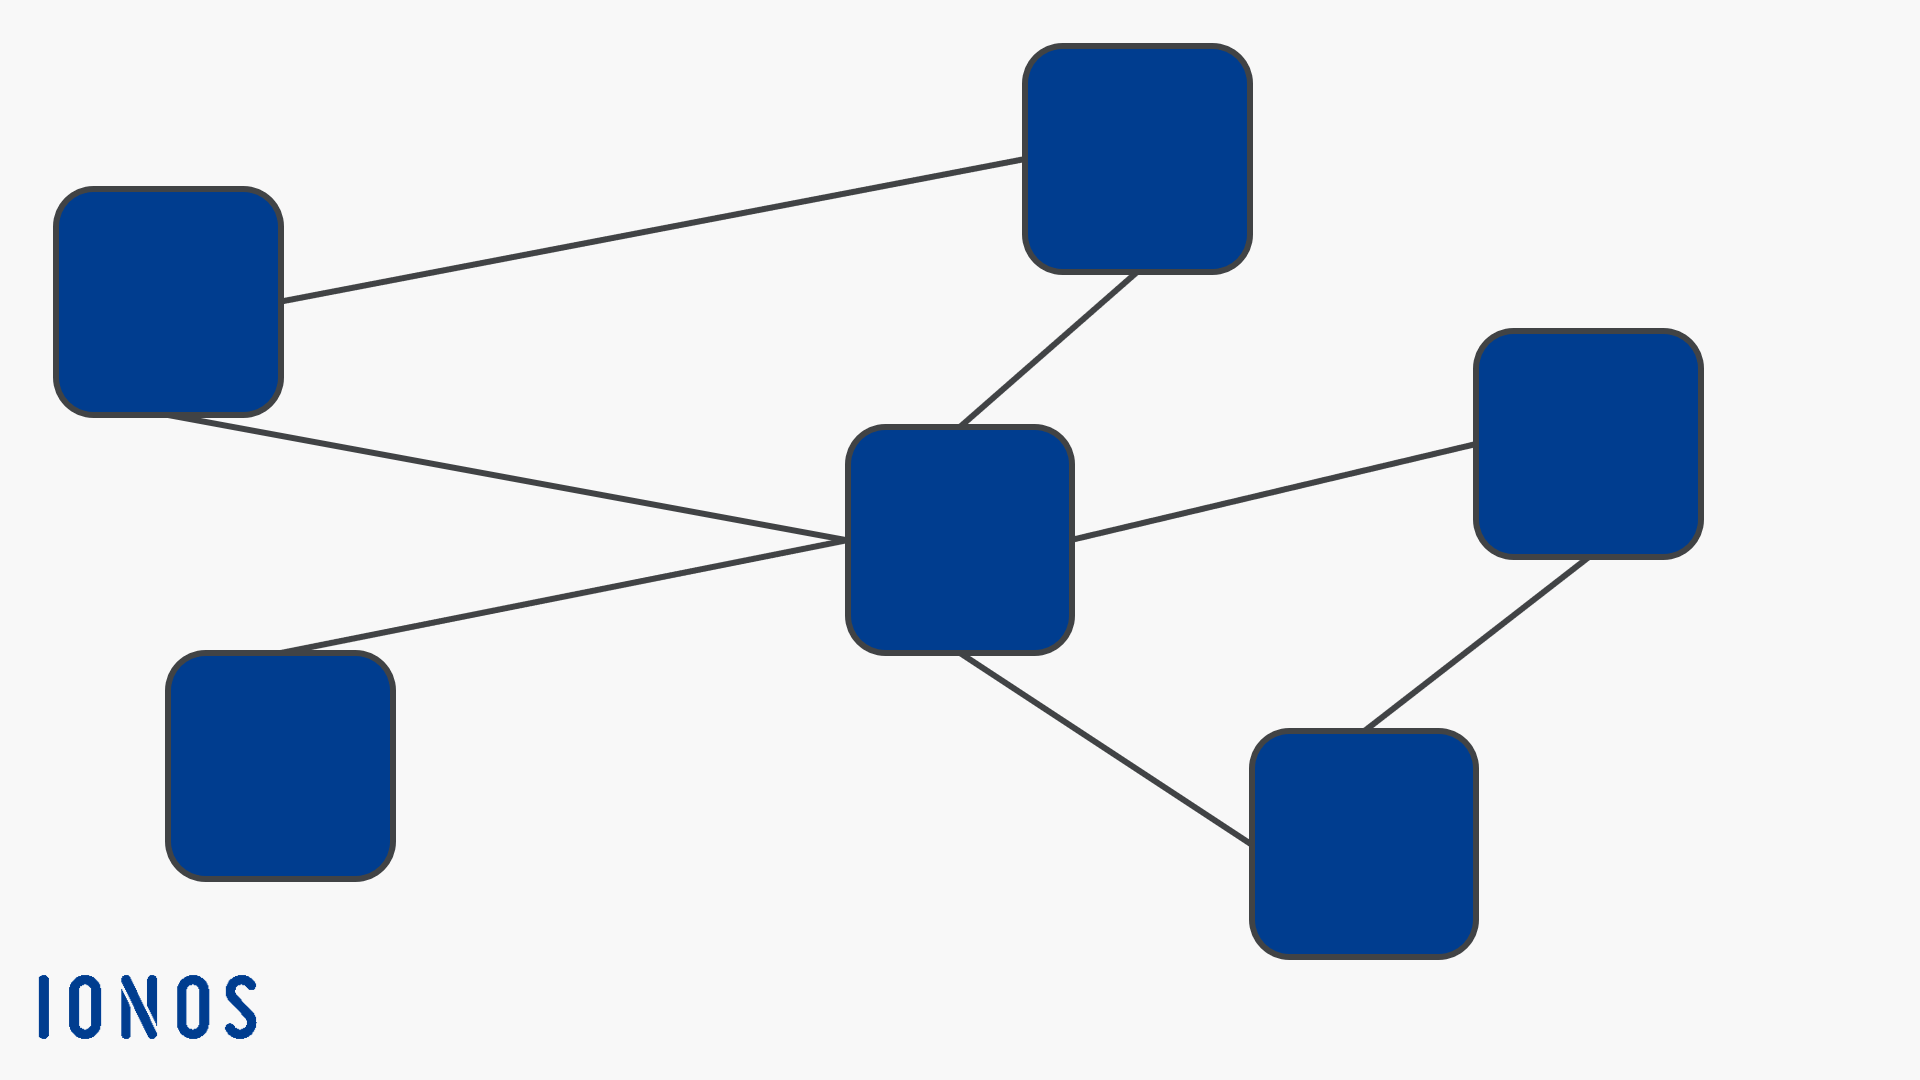 Netzwerkartiges Datenbankmodell